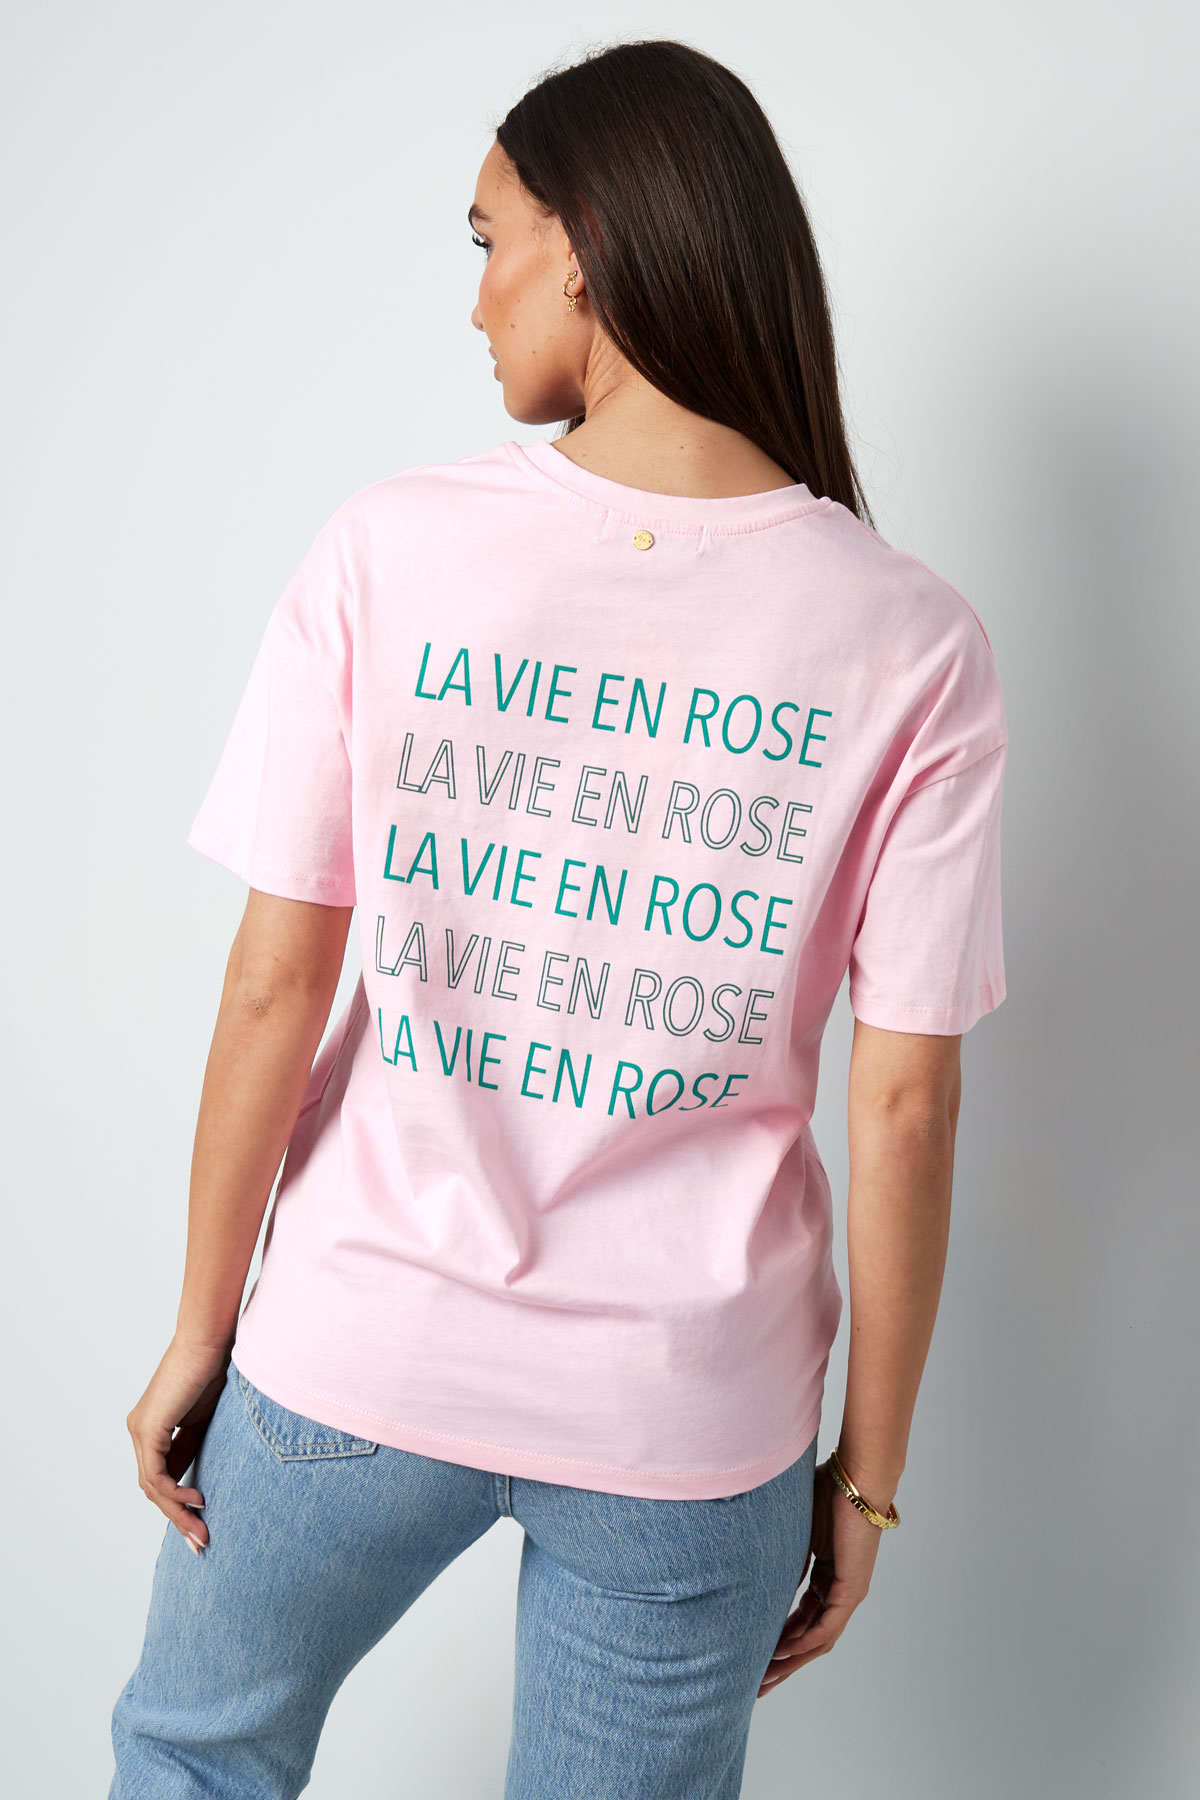 T-Shirt la vie en rose - dunkelgrau h5 Bild7